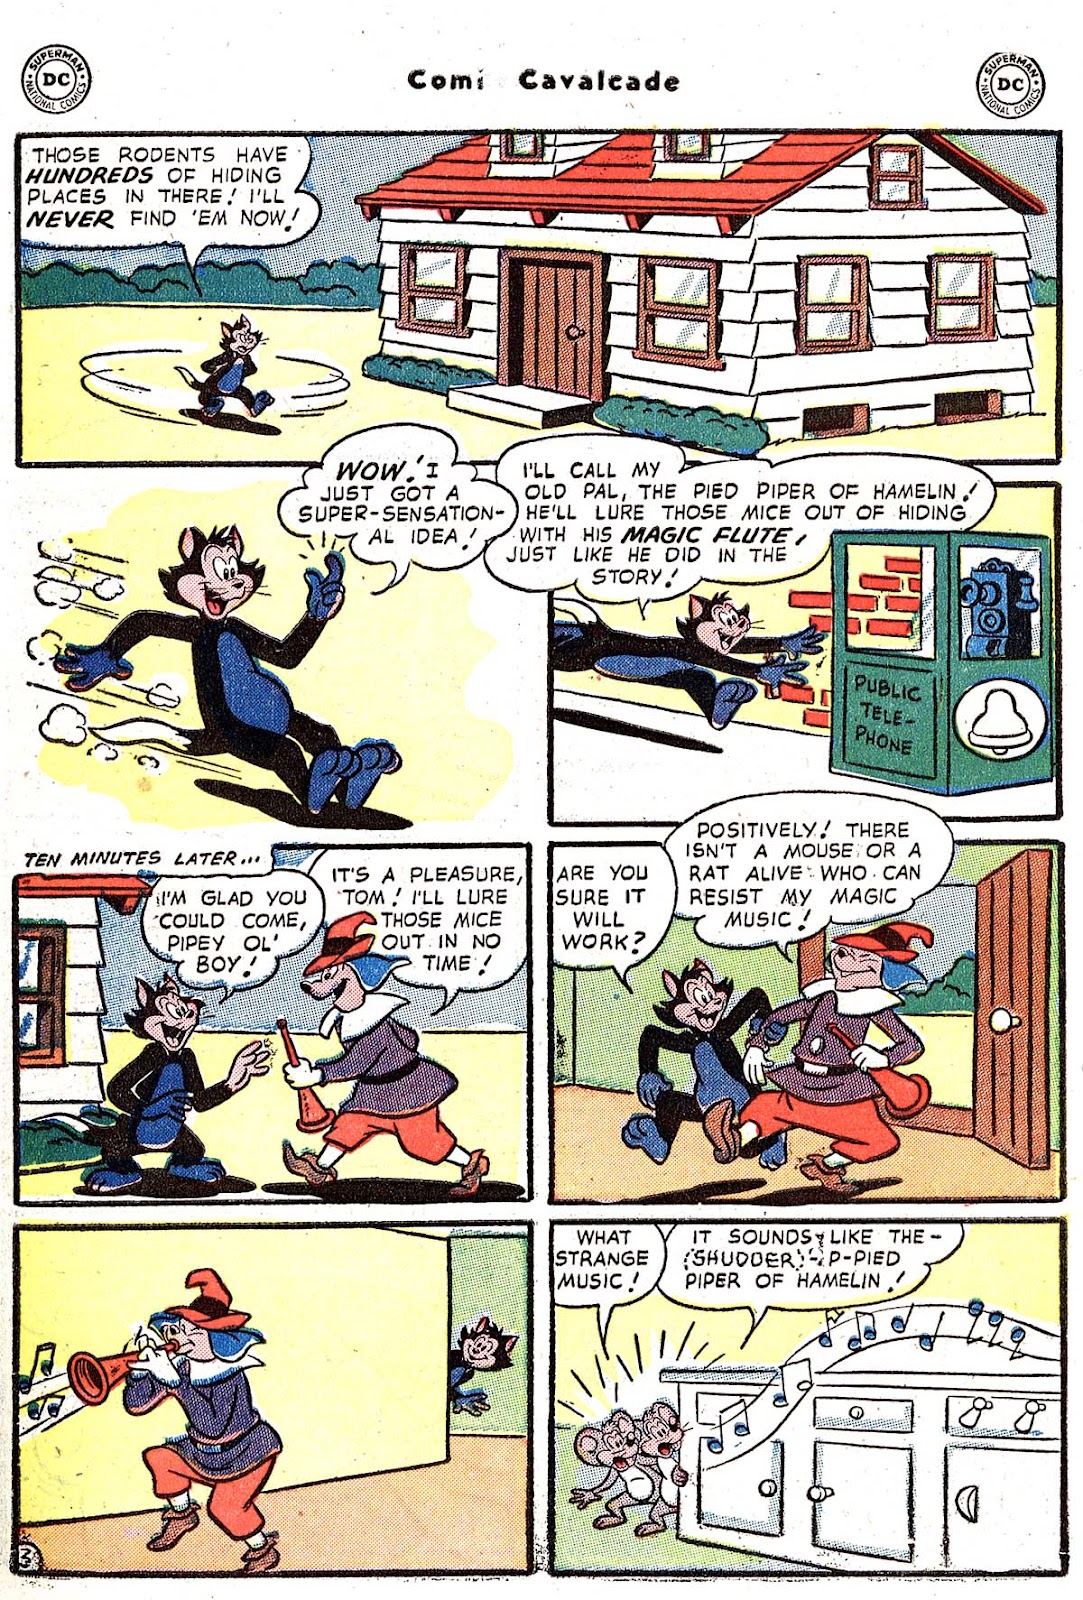 Comic Cavalcade issue 58 - Page 58